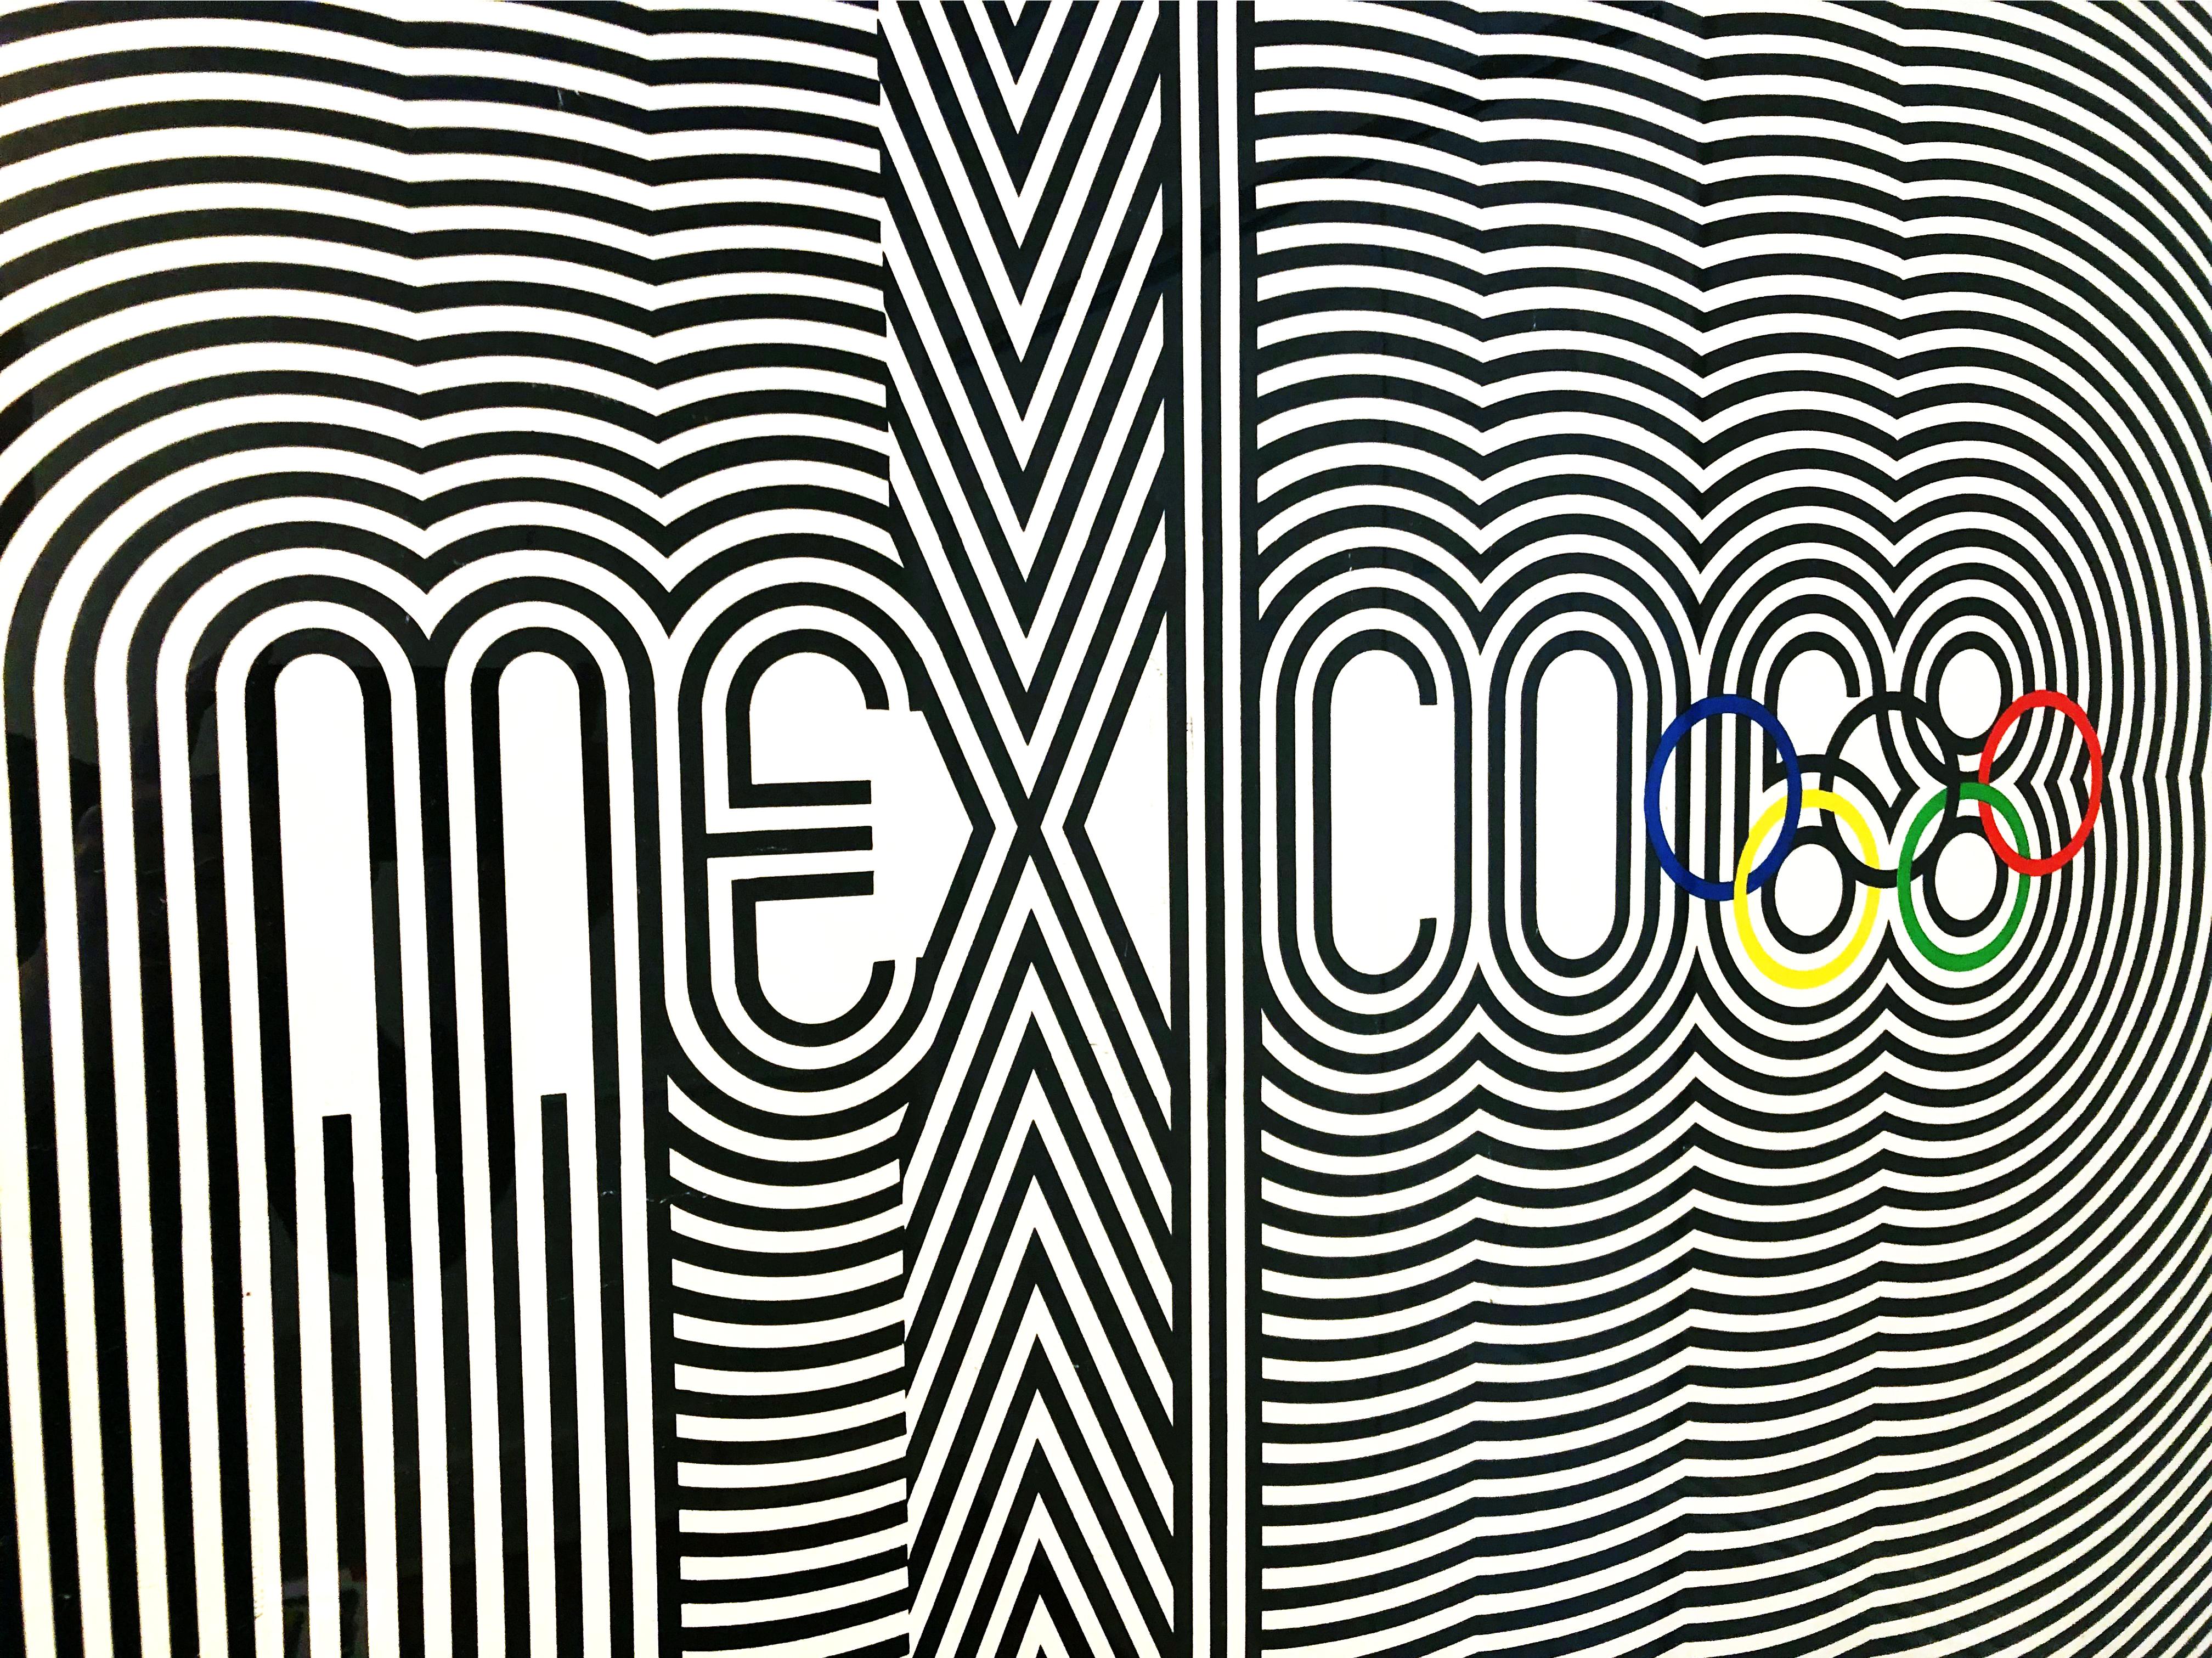 mexico 68 poster